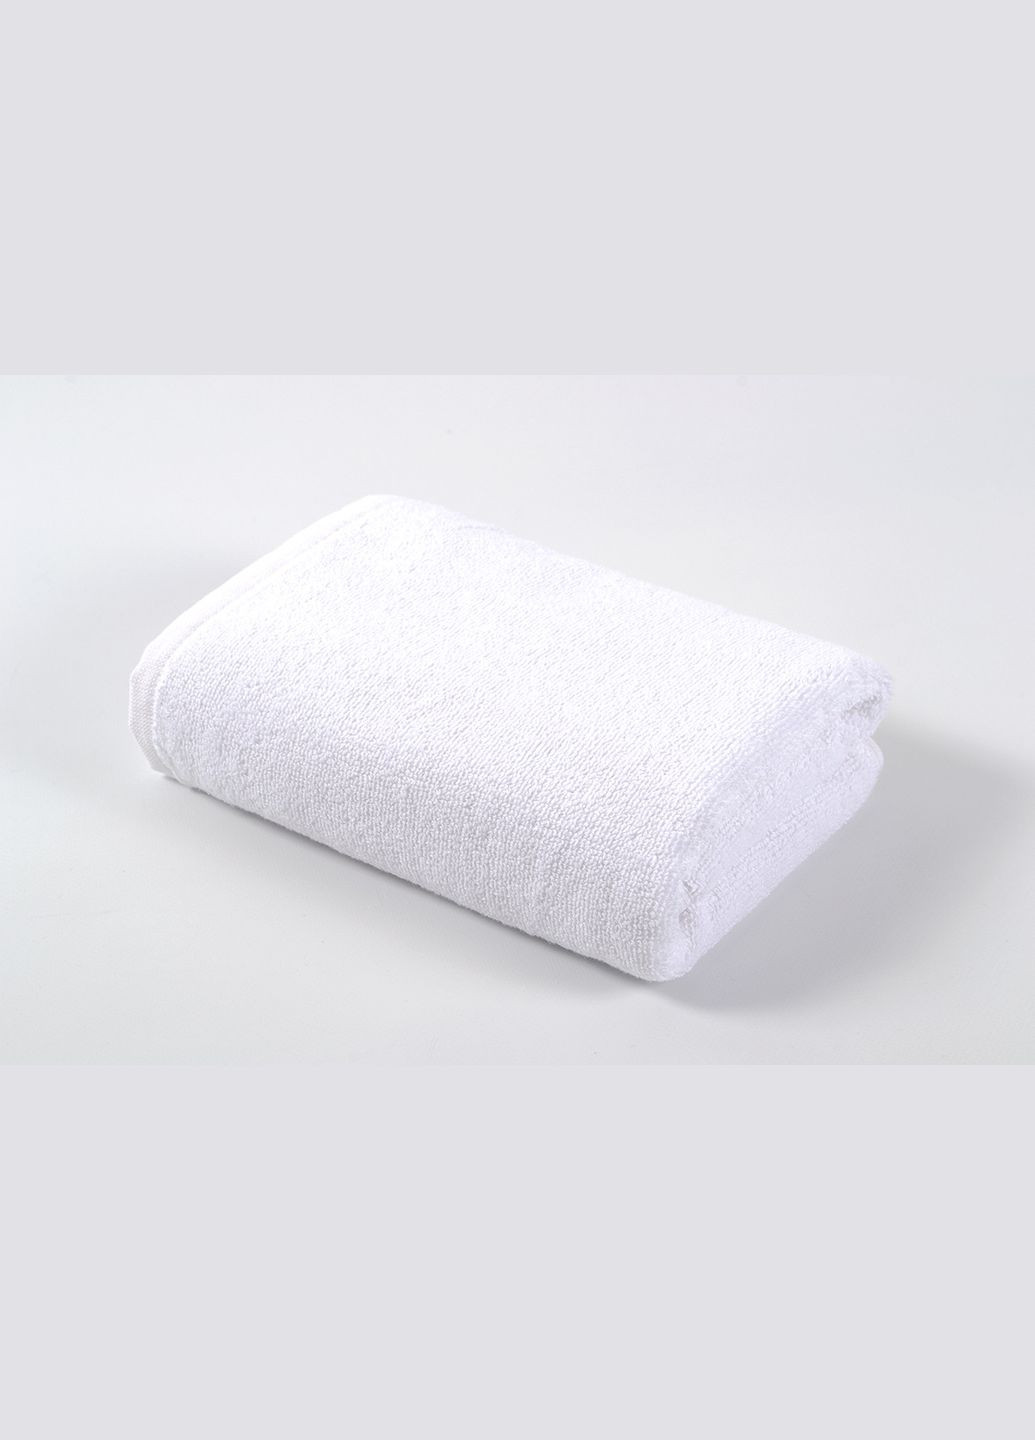 Lotus полотенце отель - 40*70 (20/2) 450 г/м2 белый производство -